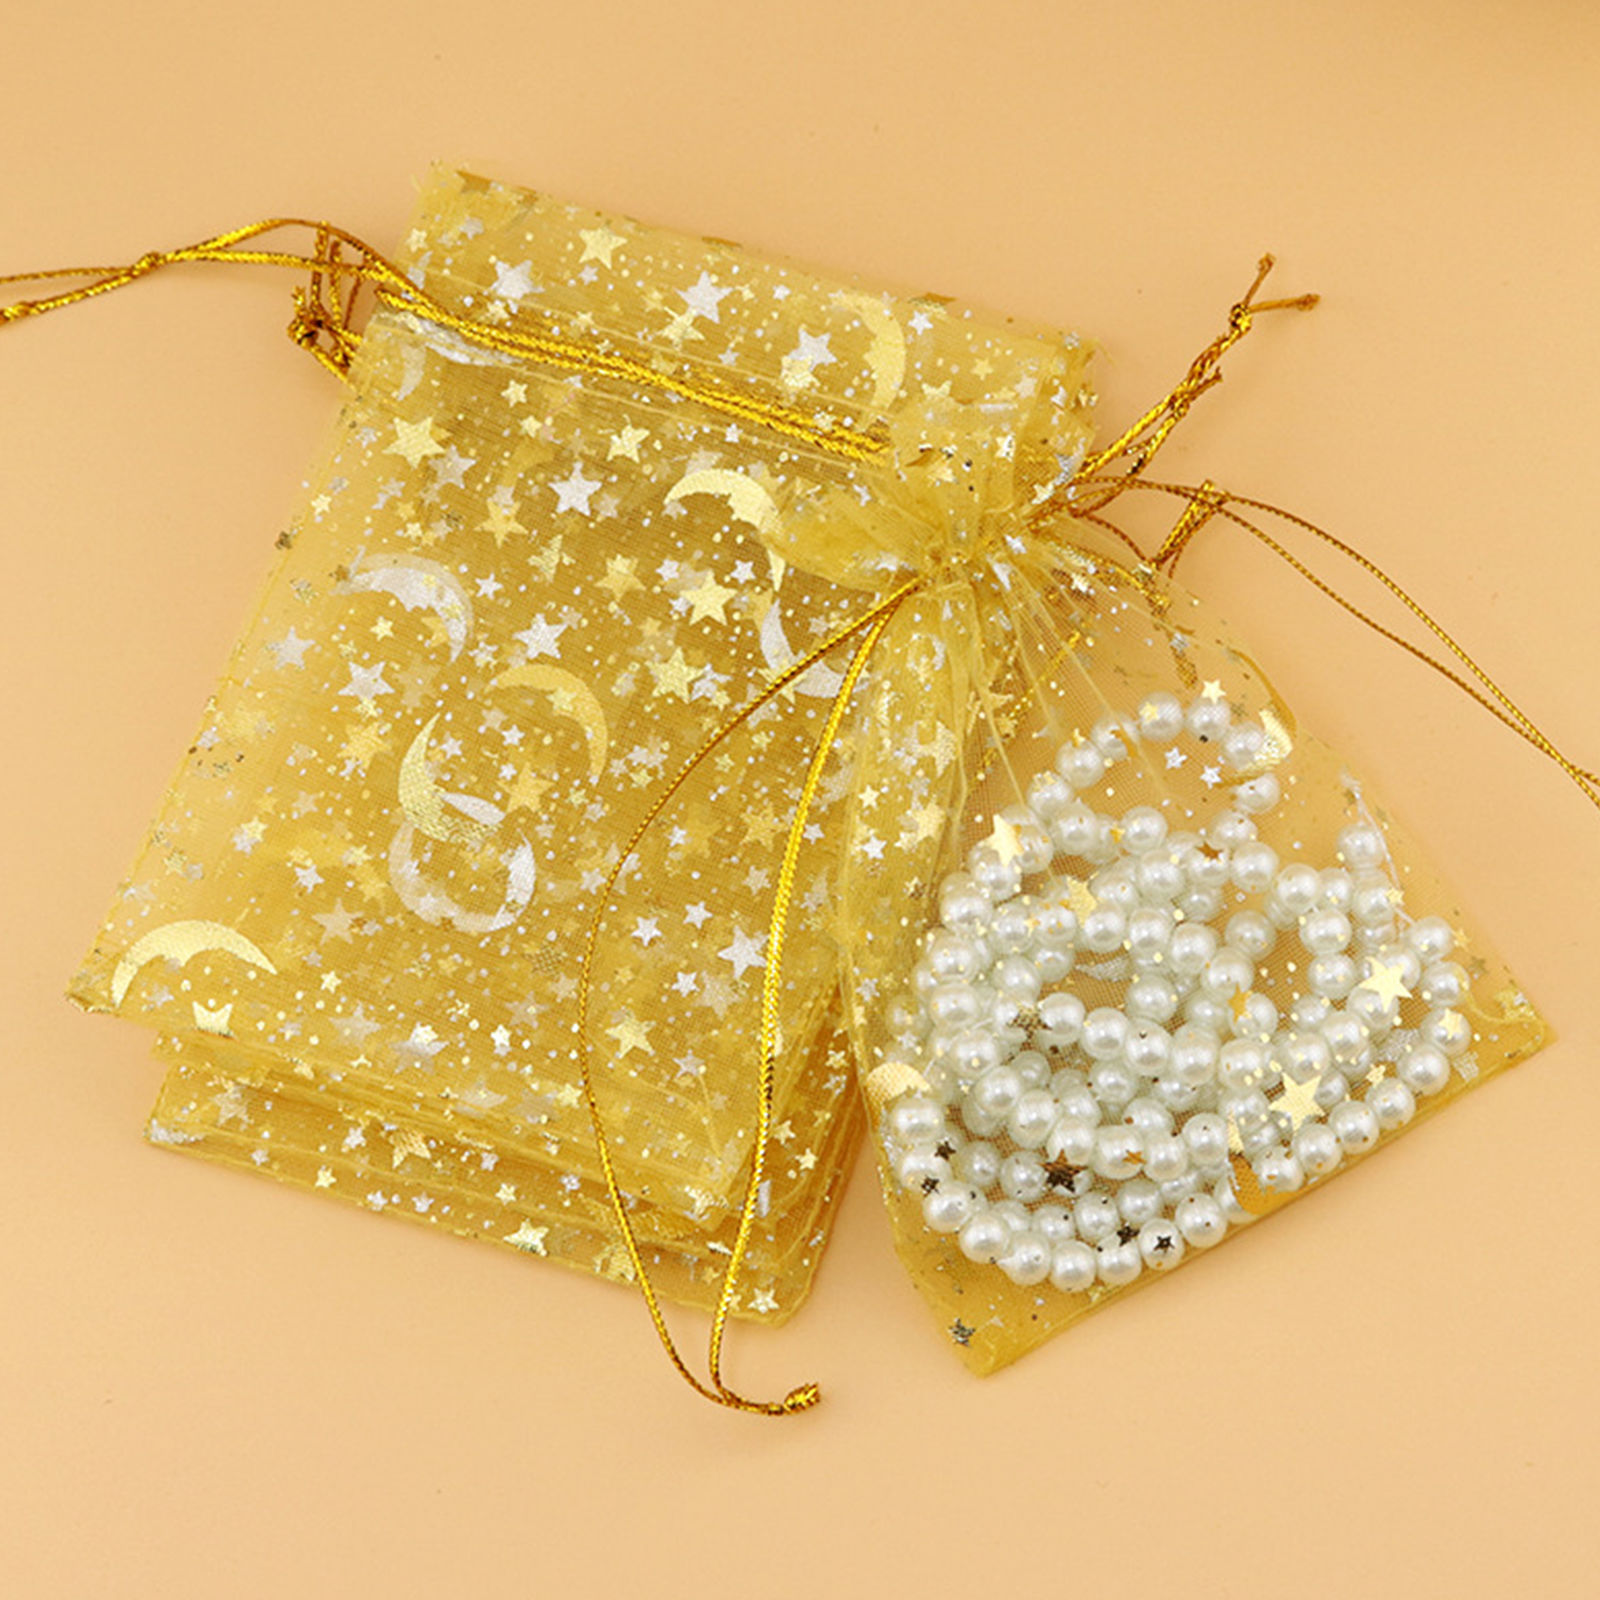 Picture of Wedding Gift Organza Galaxy Drawstring Bags Half Moon Golden Star 16cm x11cm(6 2/8" x4 3/8"), 20 PCs